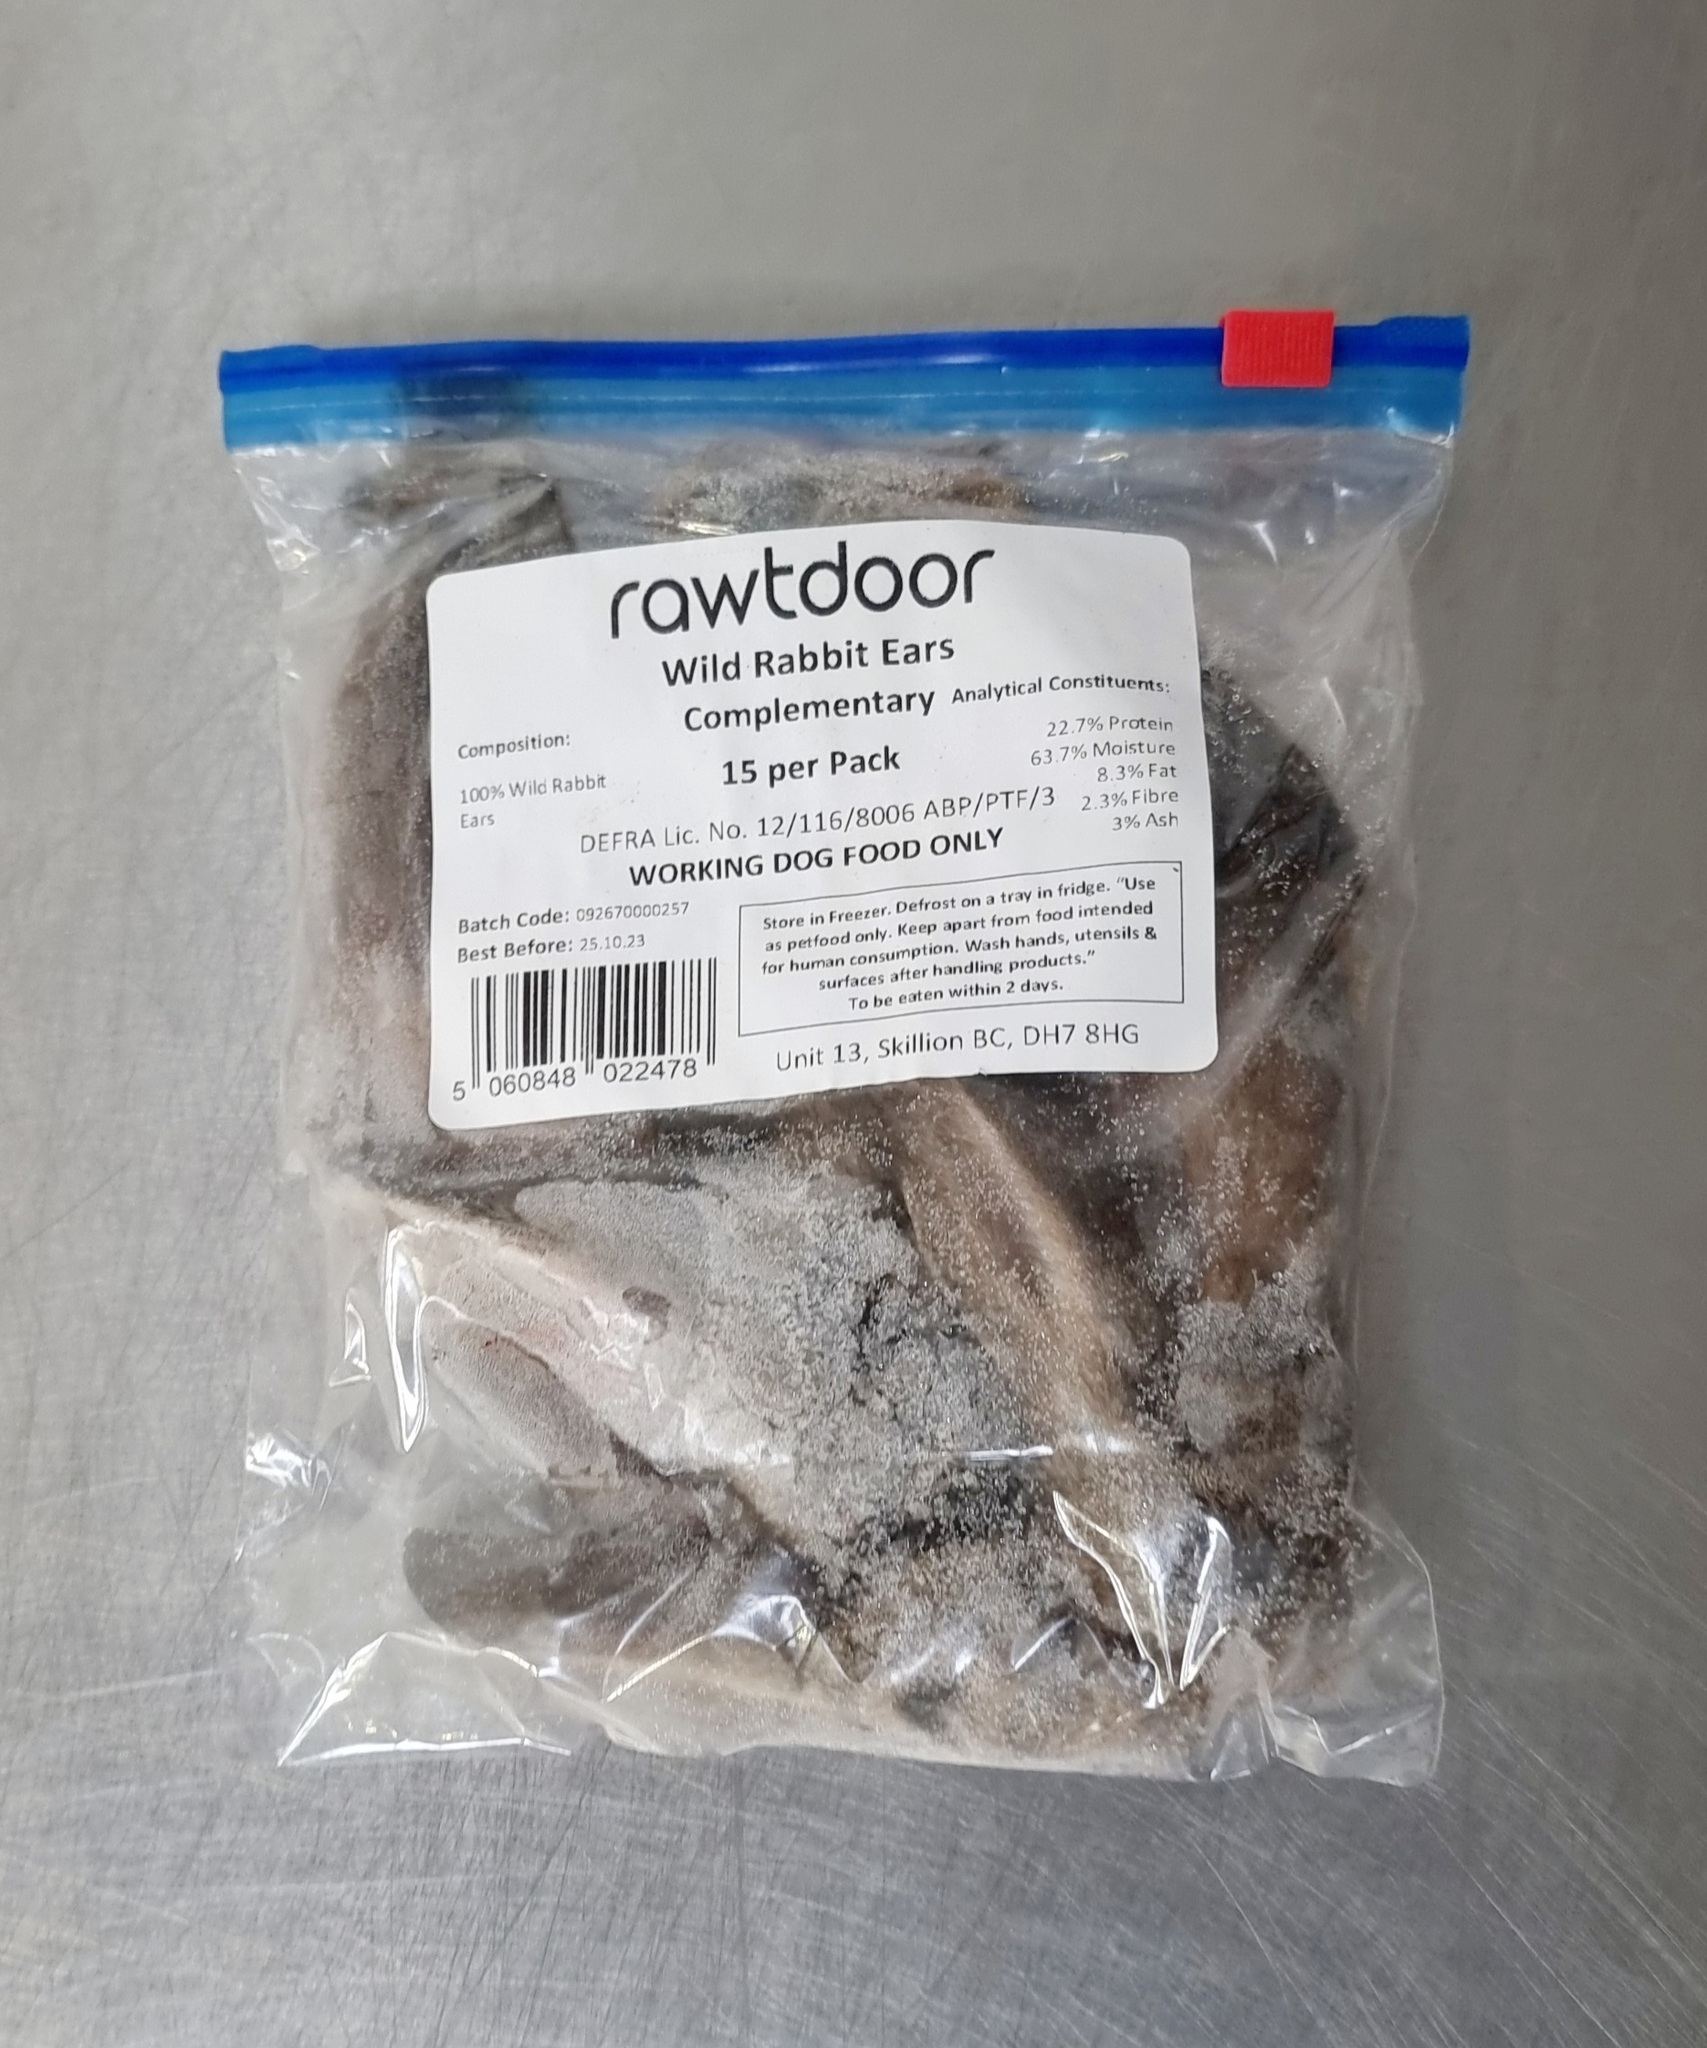 Wild Rabbit Pelt - Rawtdoor